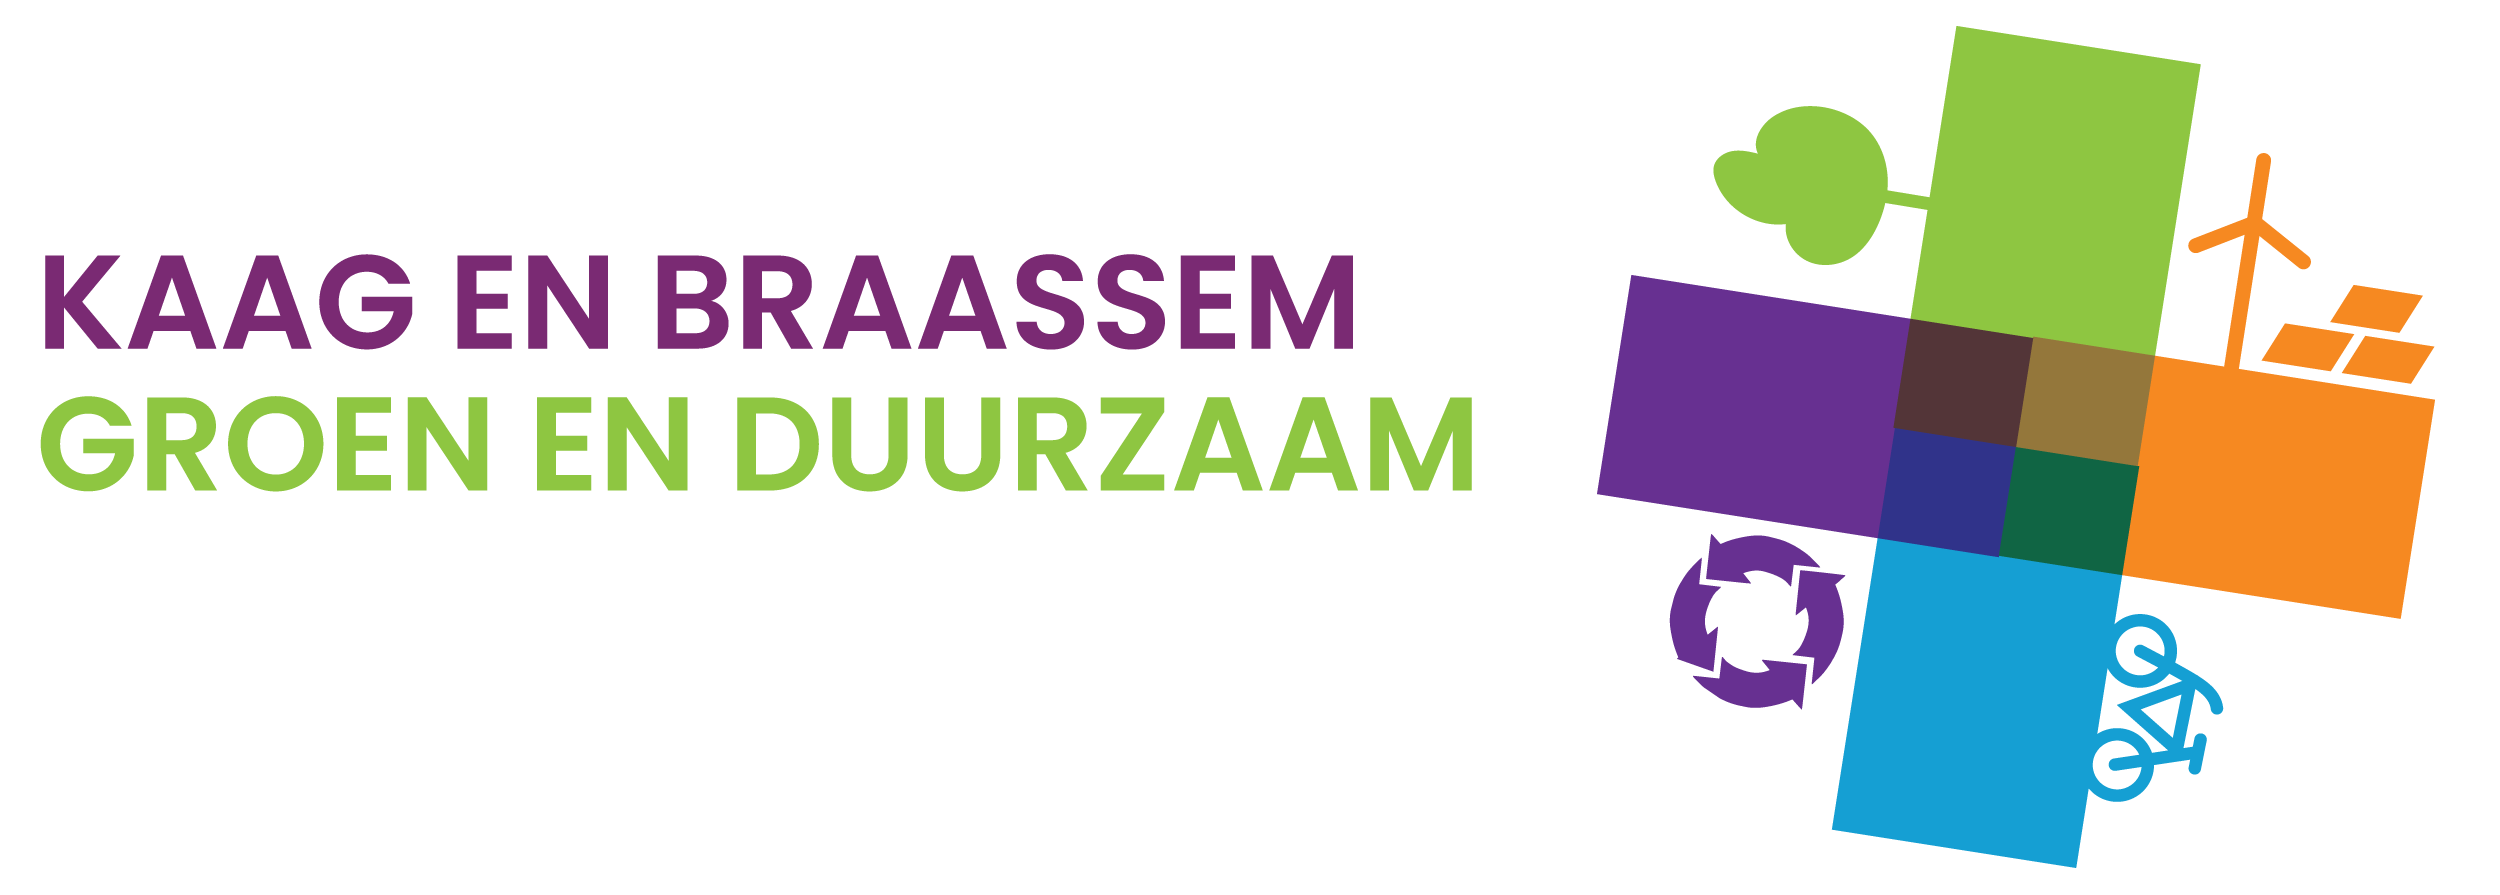 Logo van de gemeente Kaag en Braassem